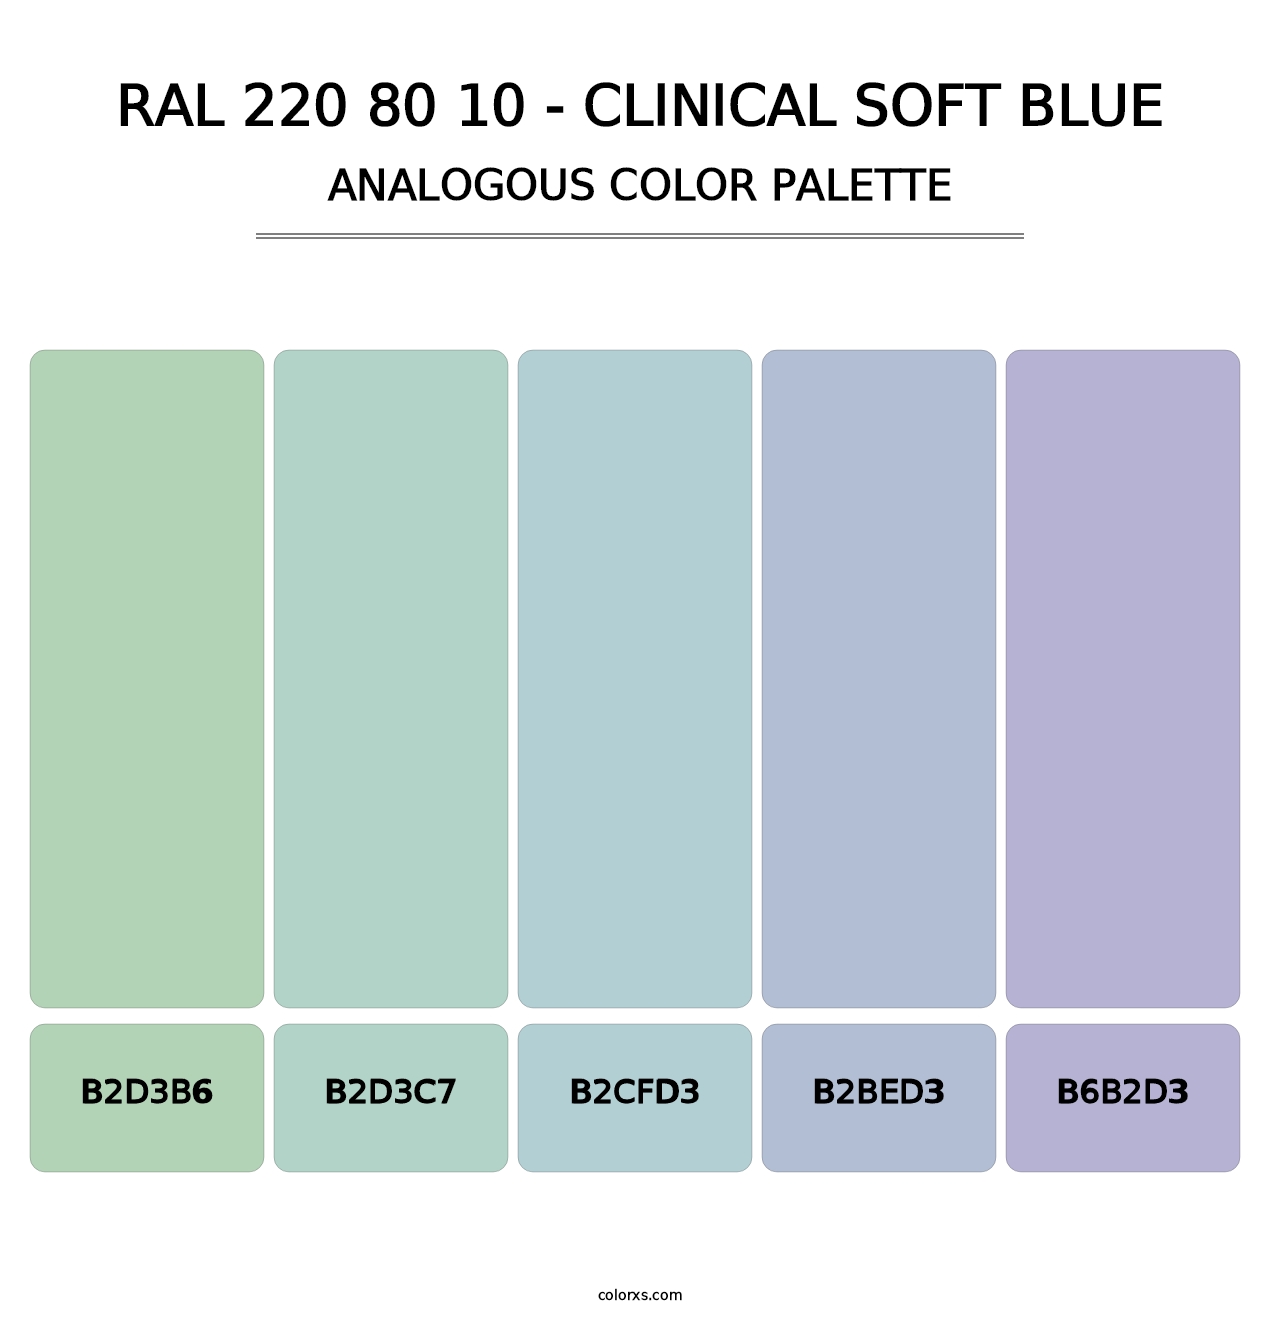 RAL 220 80 10 - Clinical Soft Blue - Analogous Color Palette